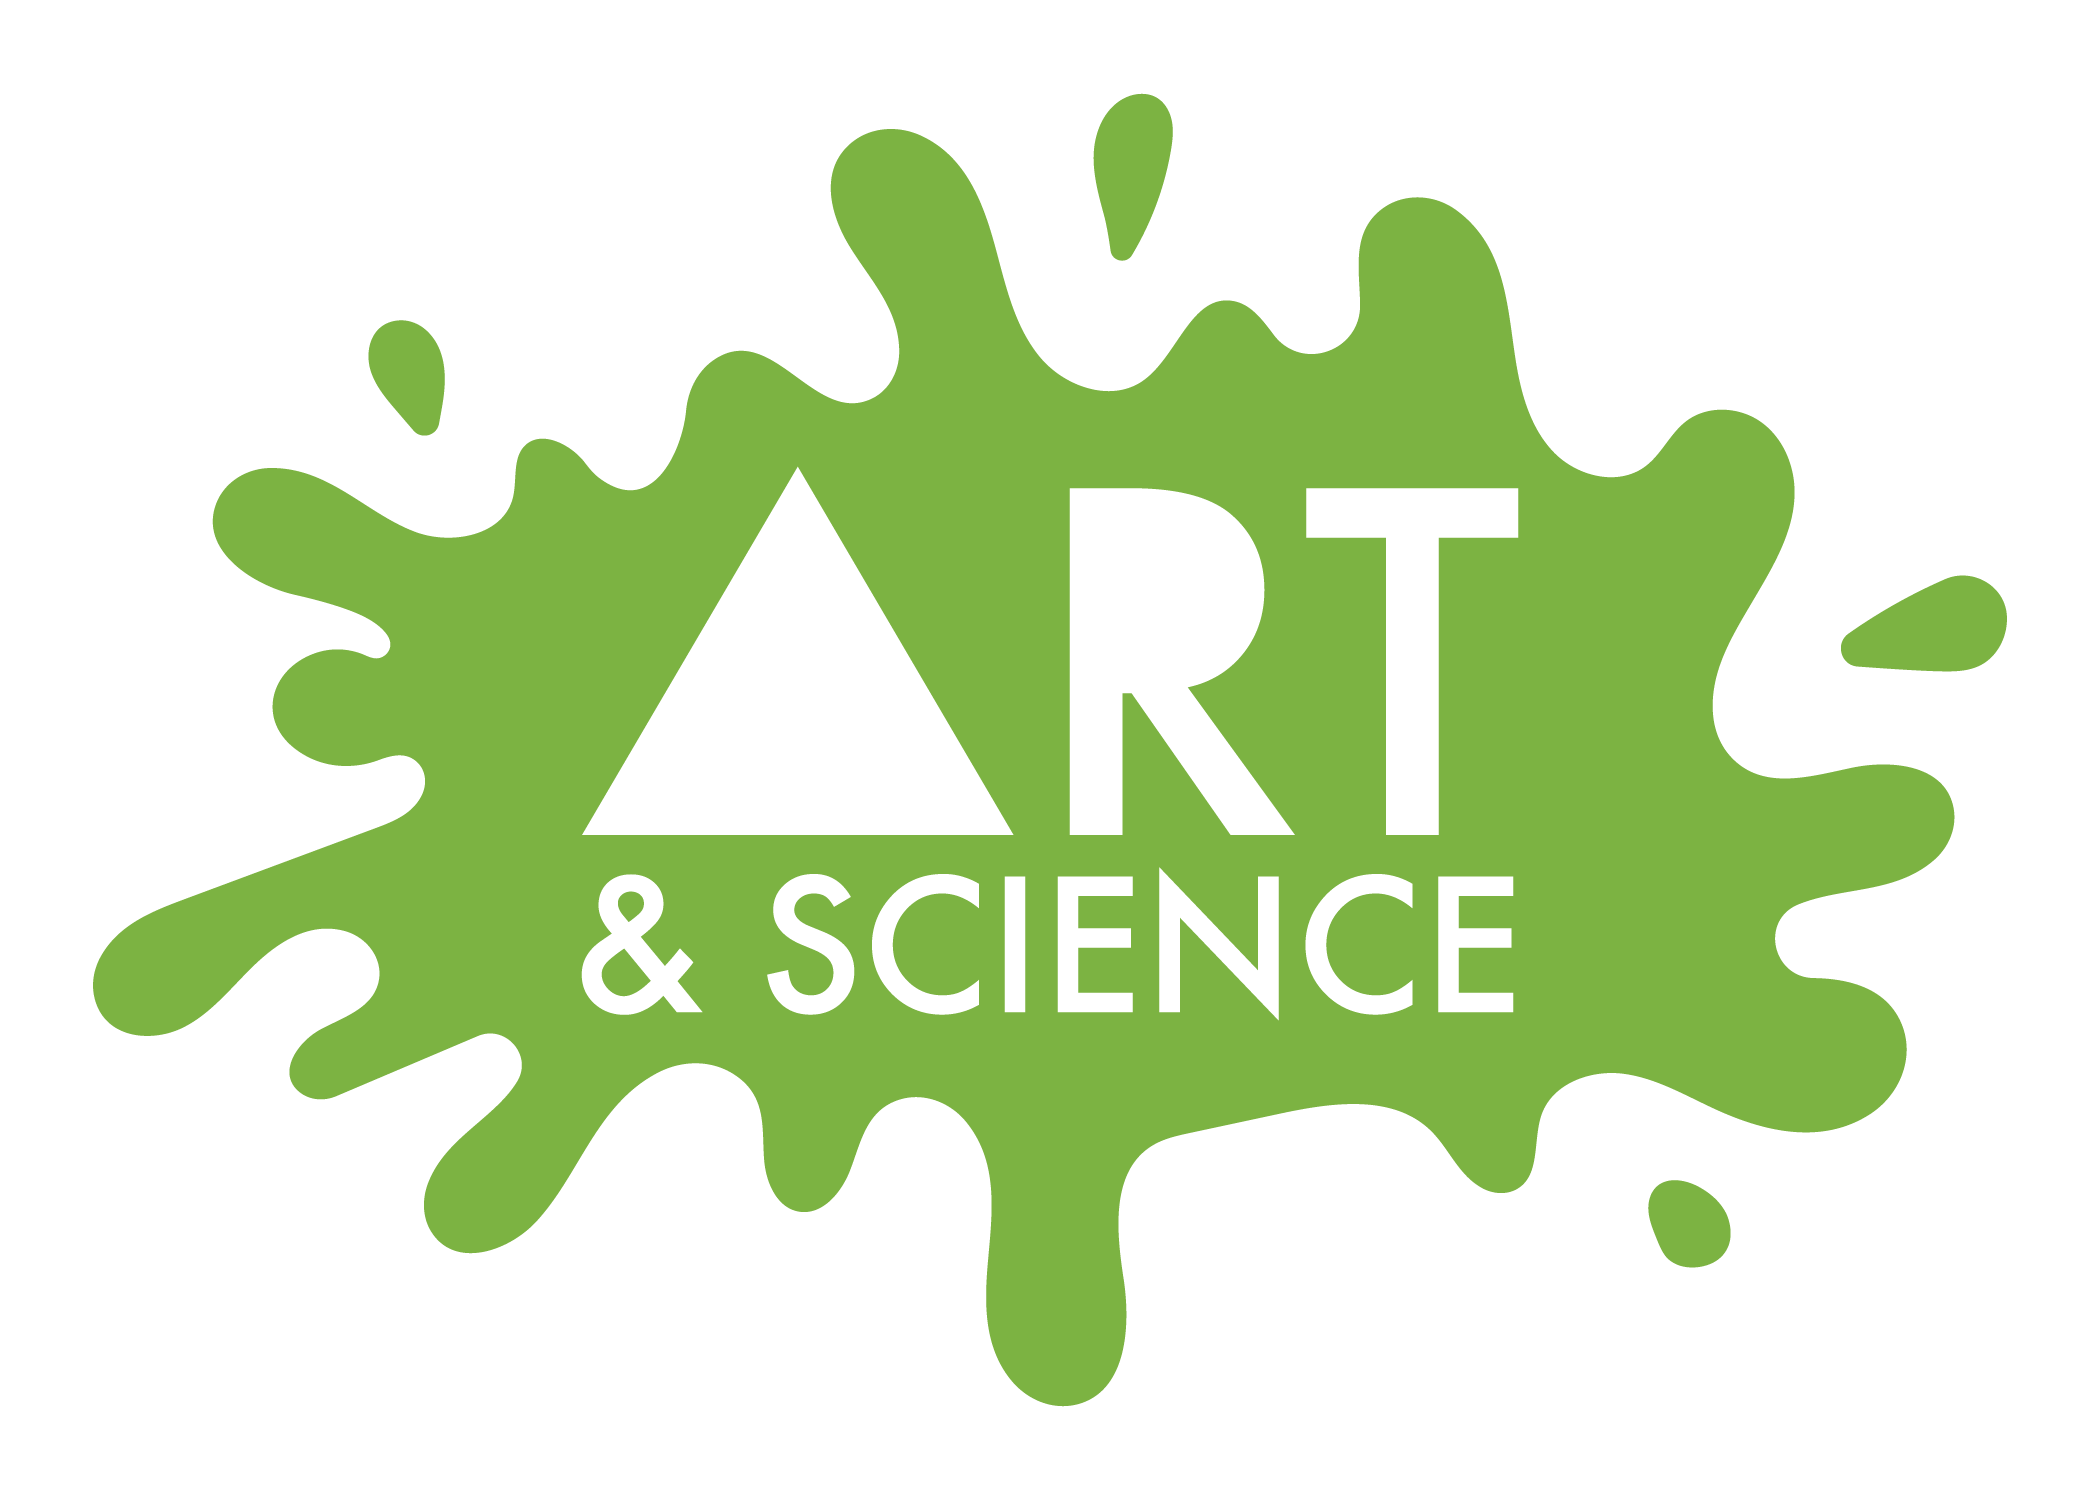 Art & Science